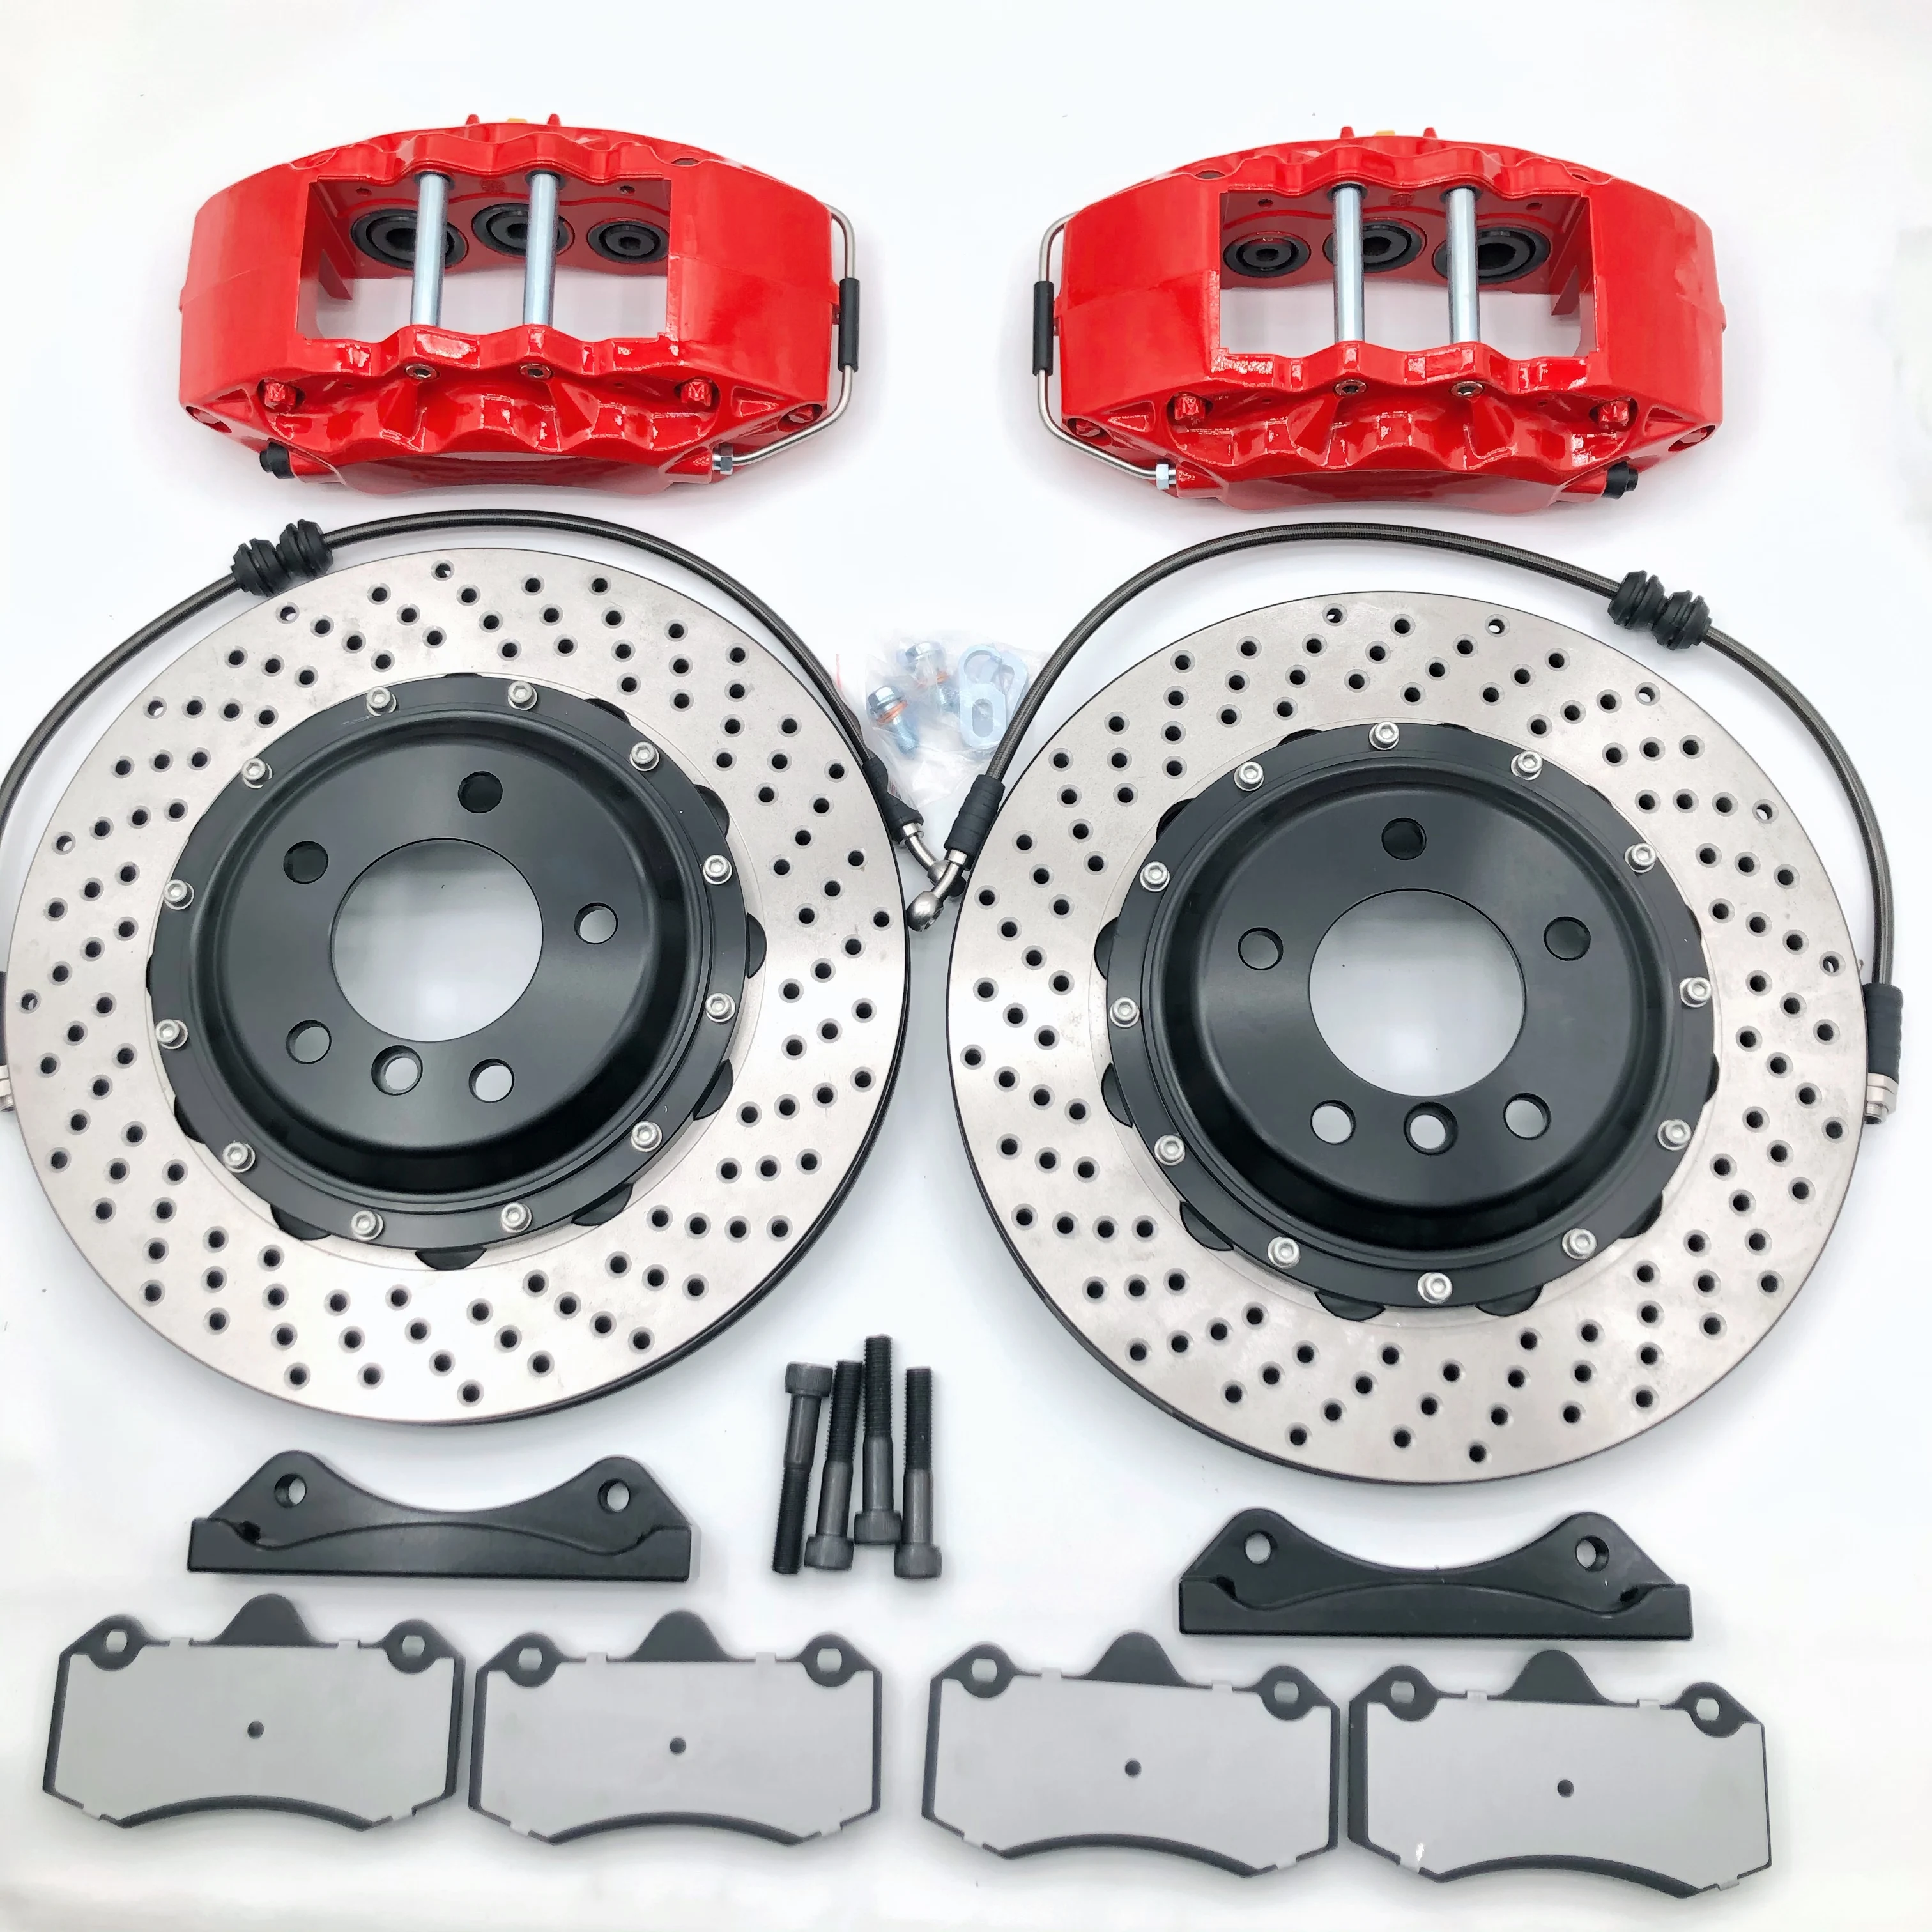 

Jekit 6 Pots Brake Caliper Disc Rotor 355*32mm For 2018-Toyota CHR 2012 Peugeot RCZ Rim 18 Inch VIN Code VF34J5FVACP003372